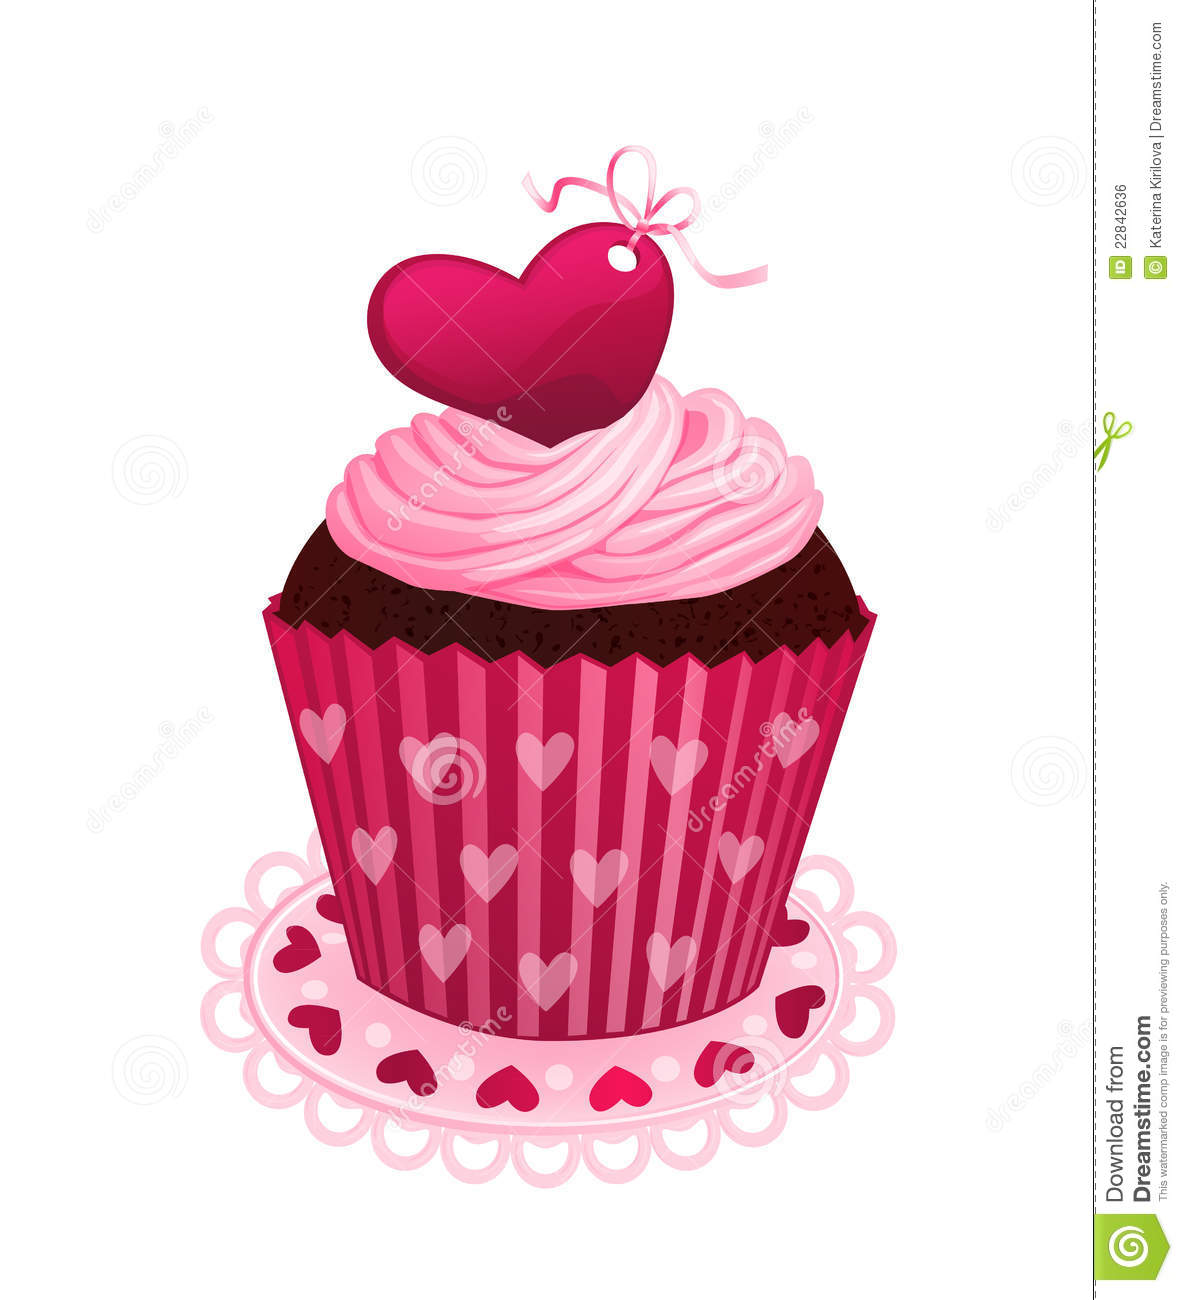 Valentine Day Cupcake Royalty Free Stock Image   Image  22842636